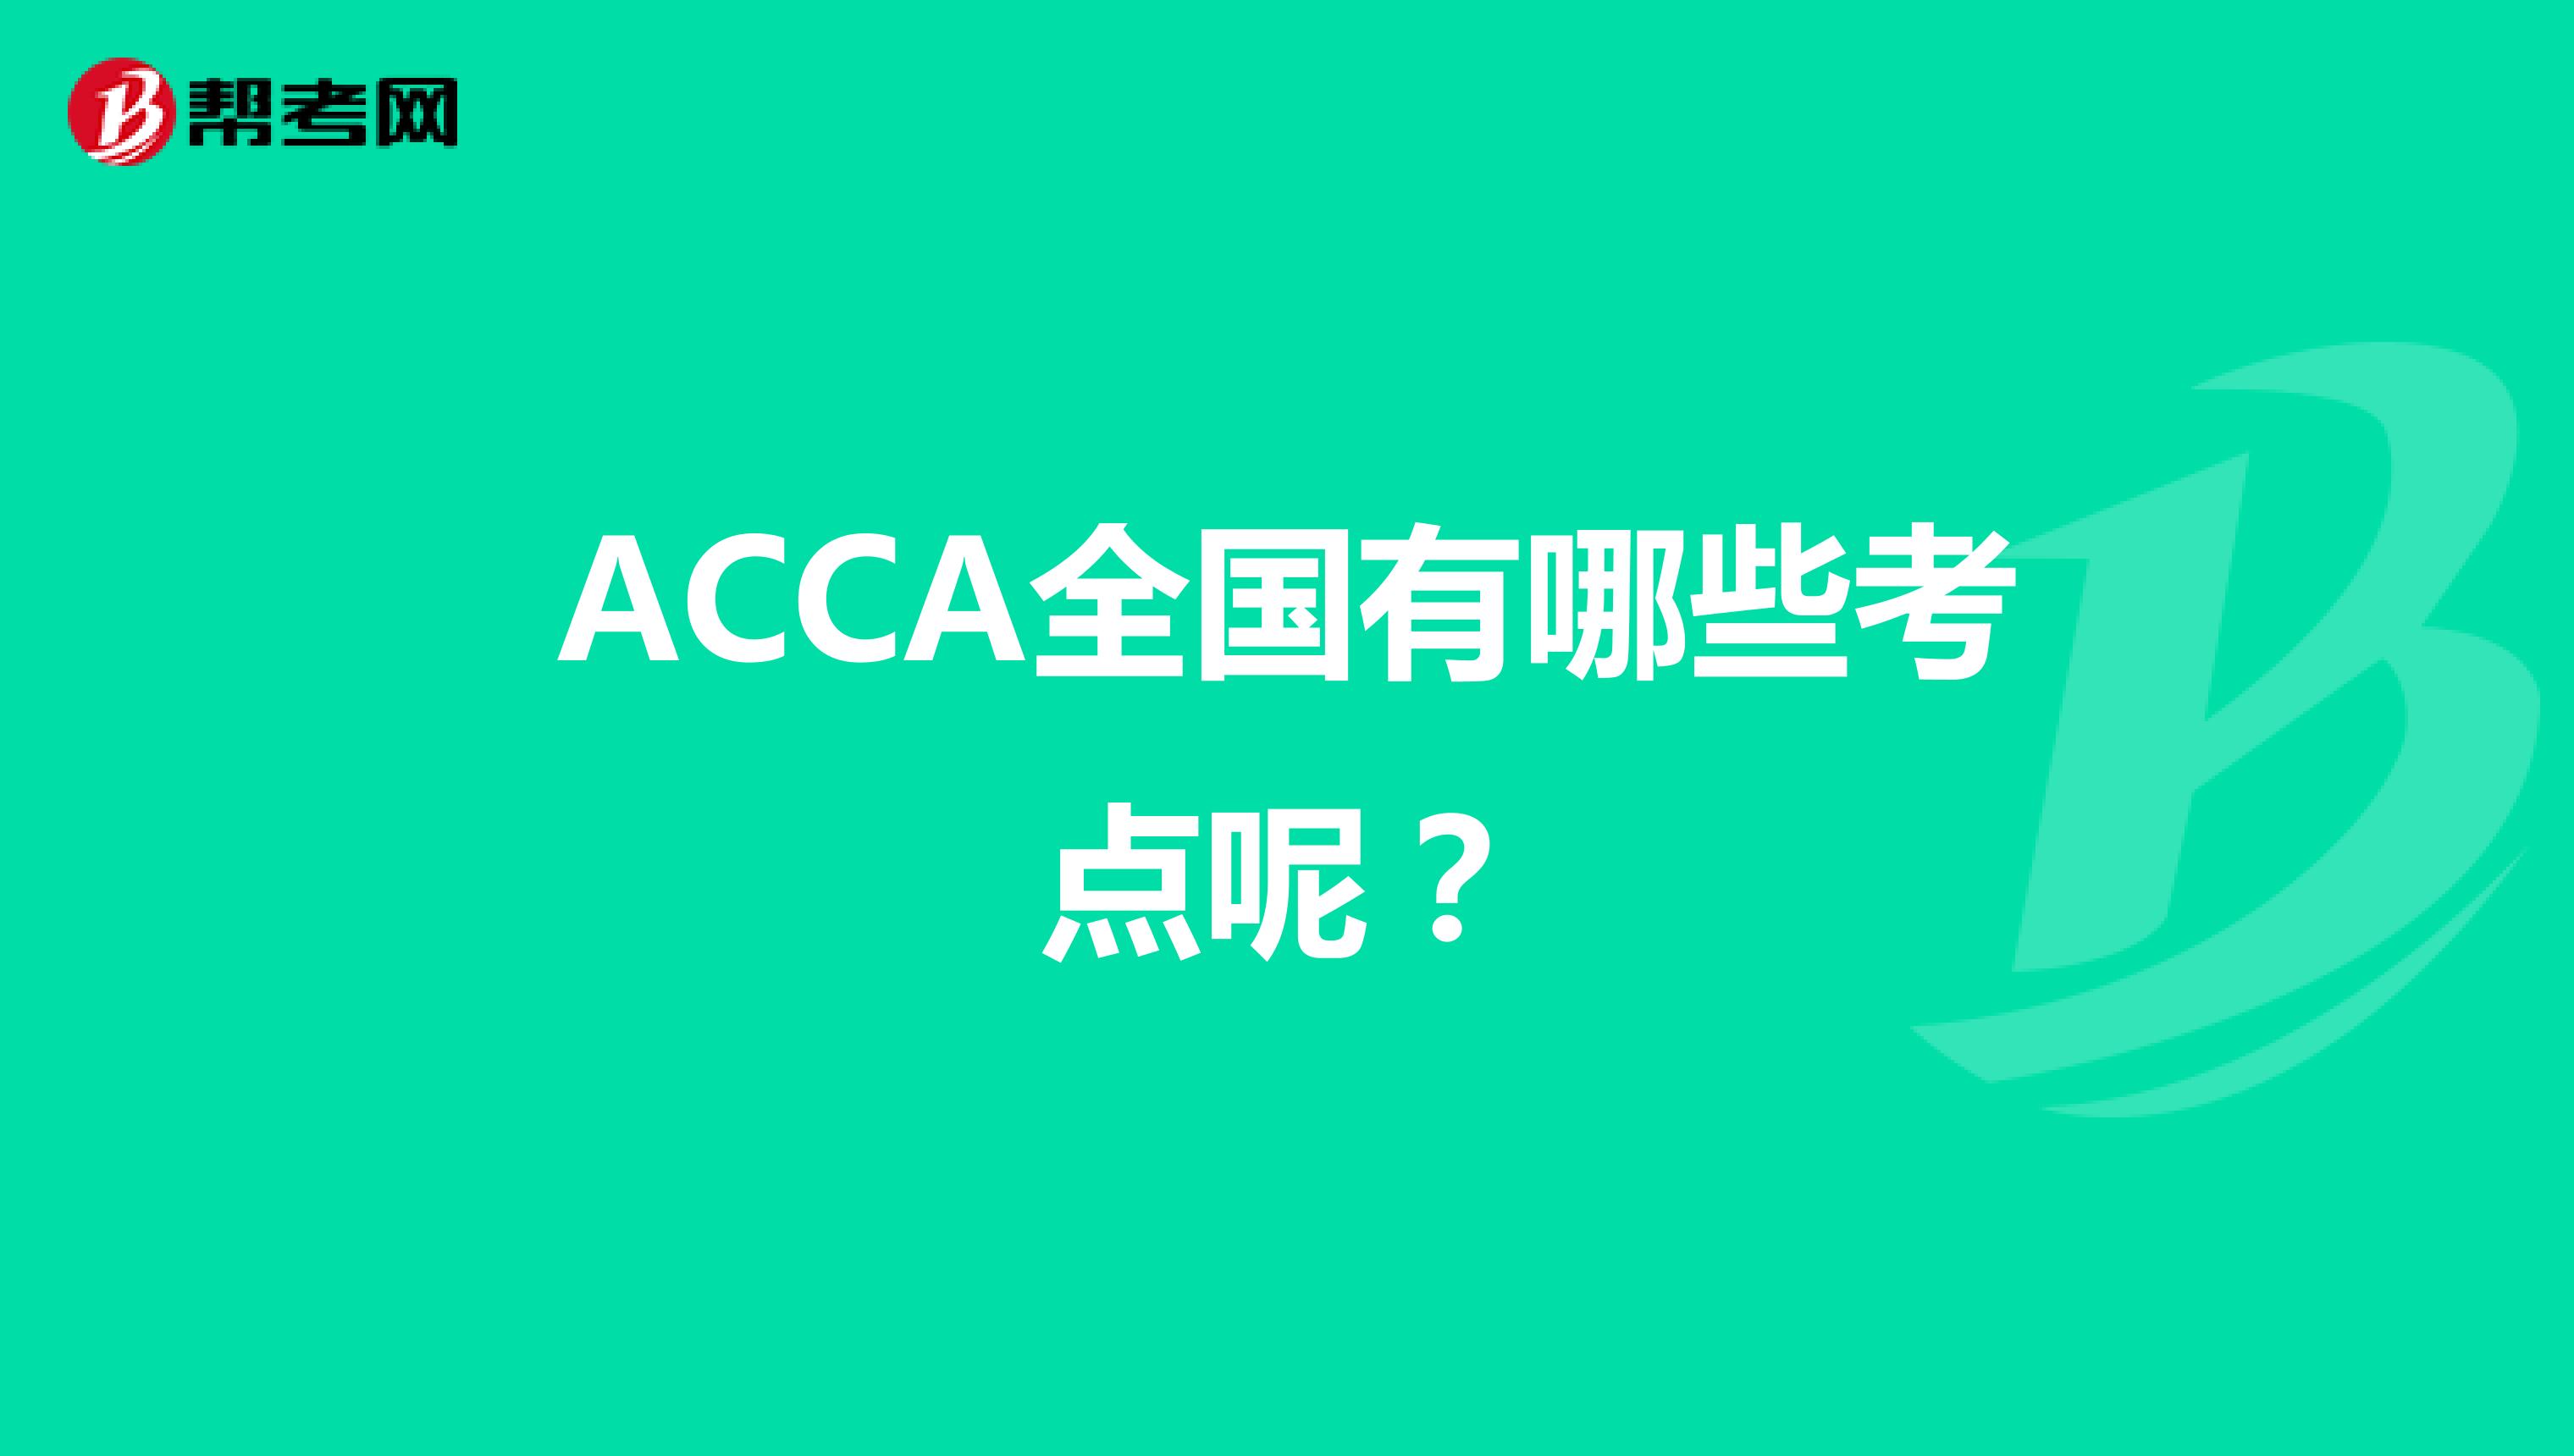 ACCA全国有哪些考点呢？